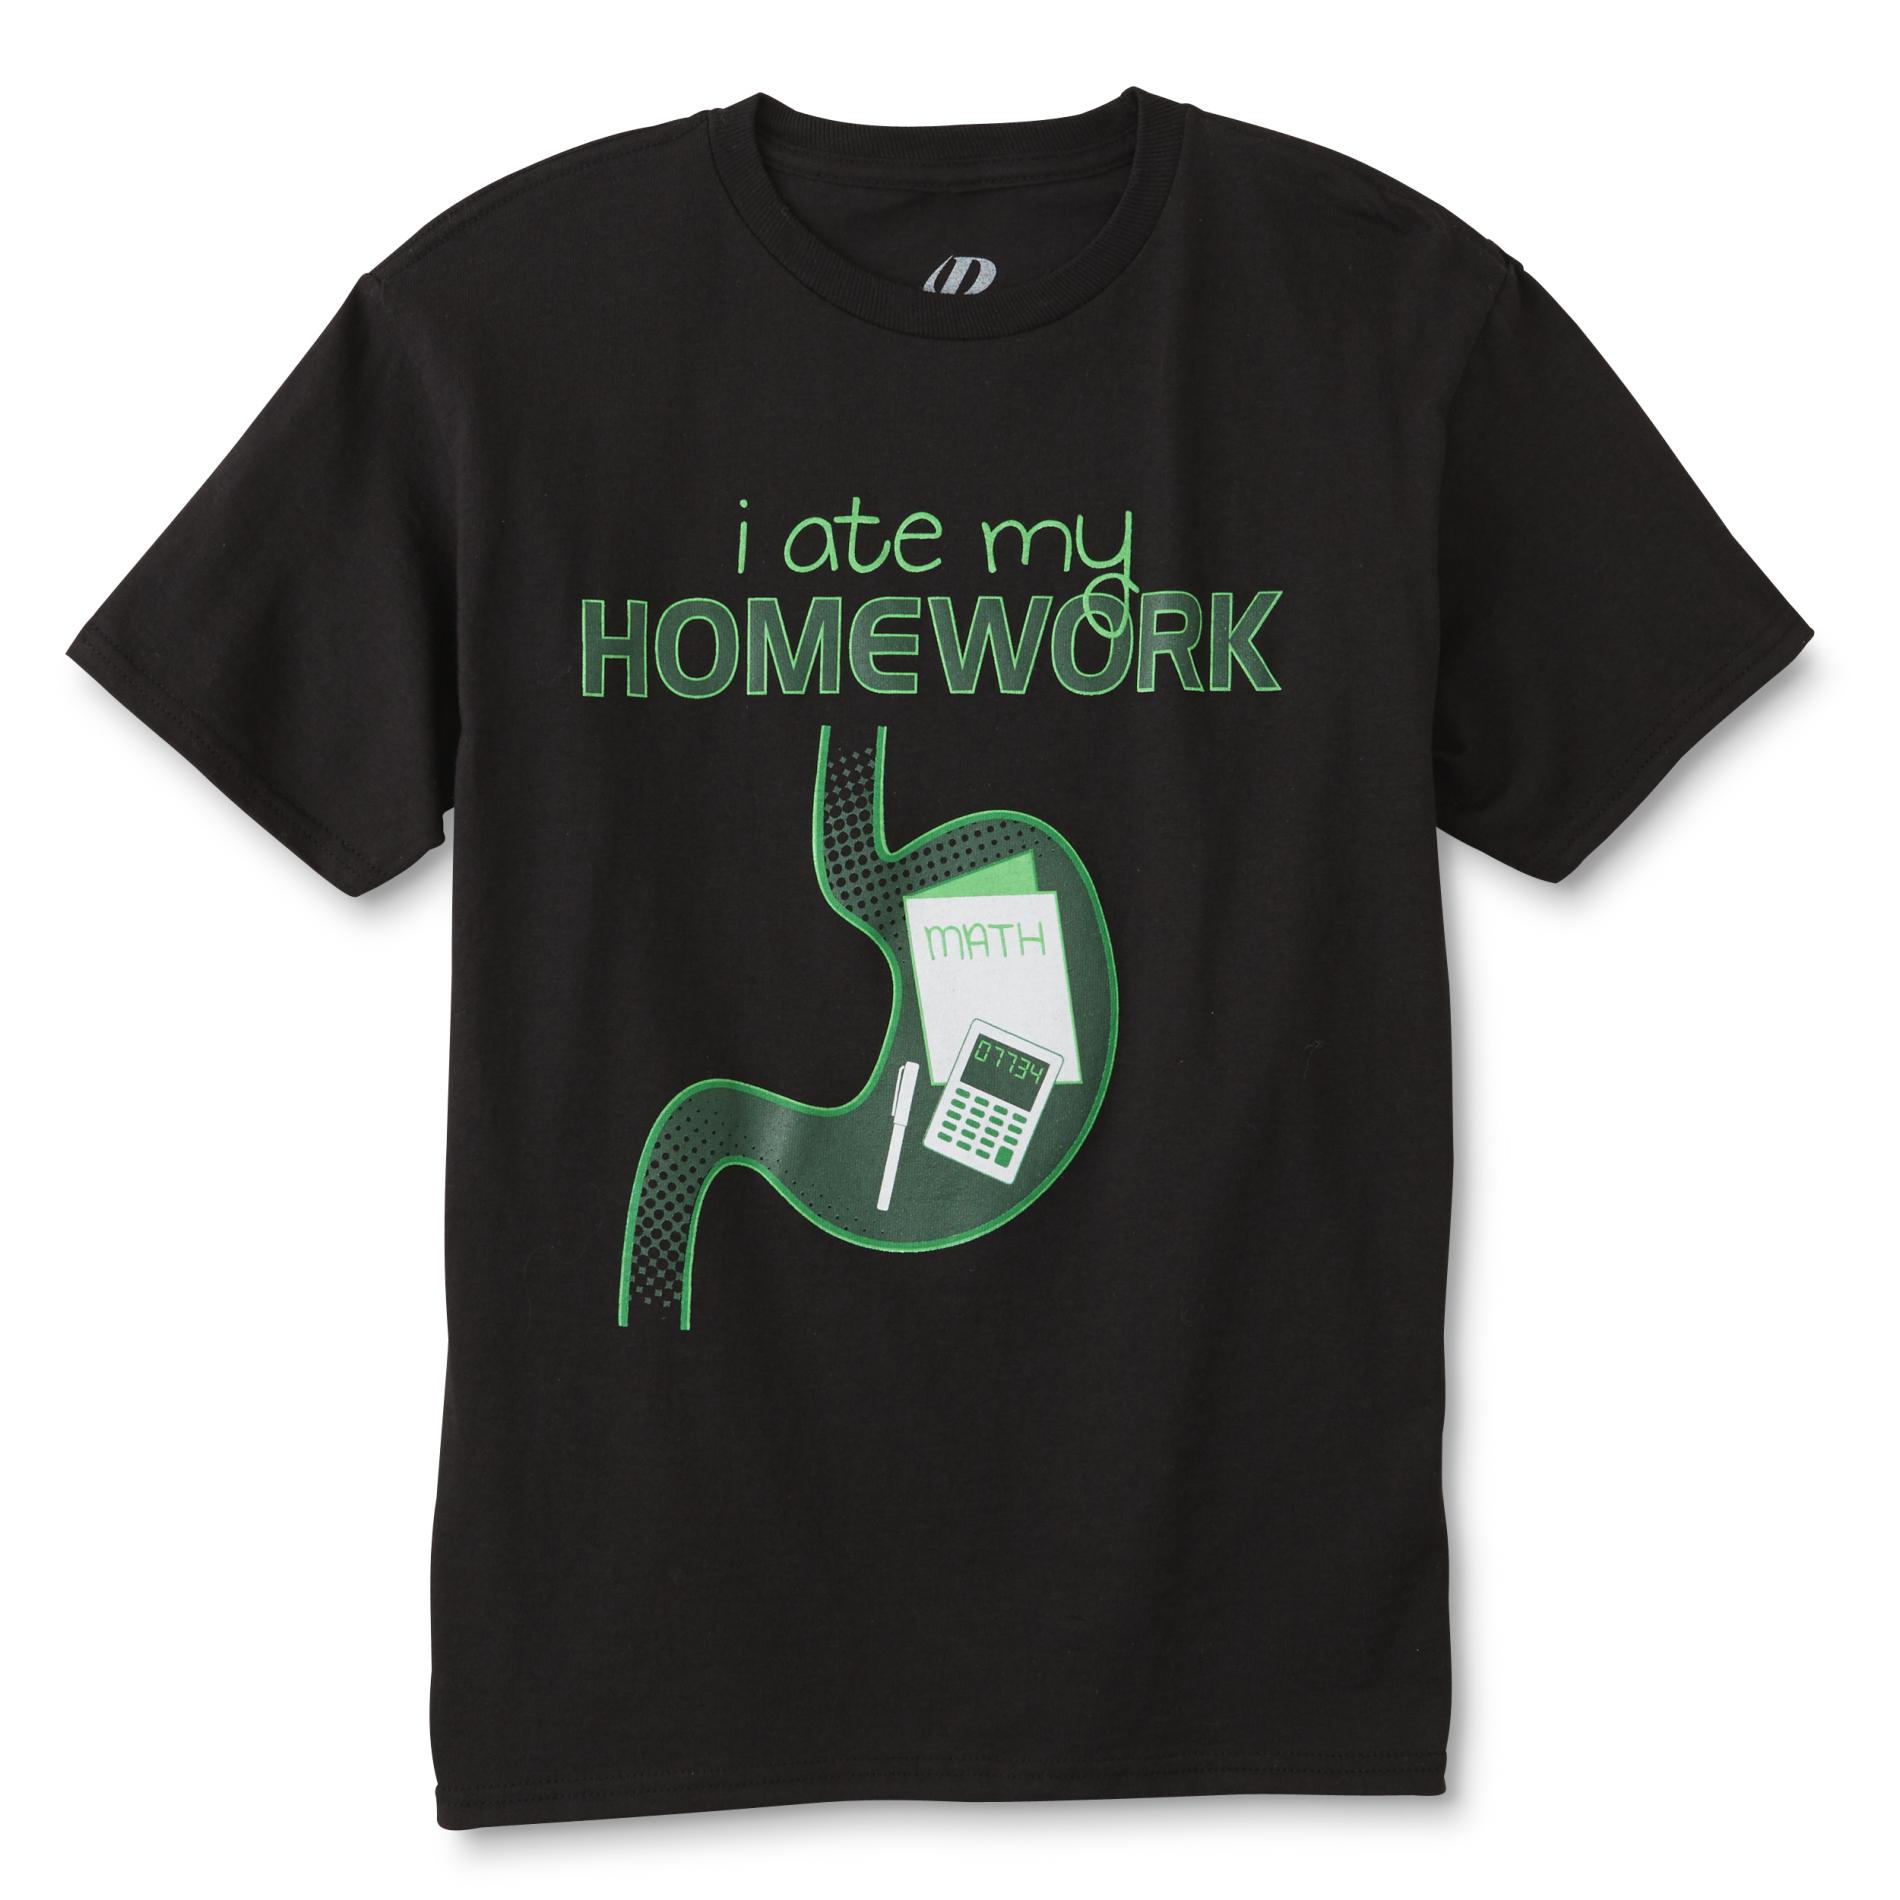 Boy's Graphic T-Shirt - Homework